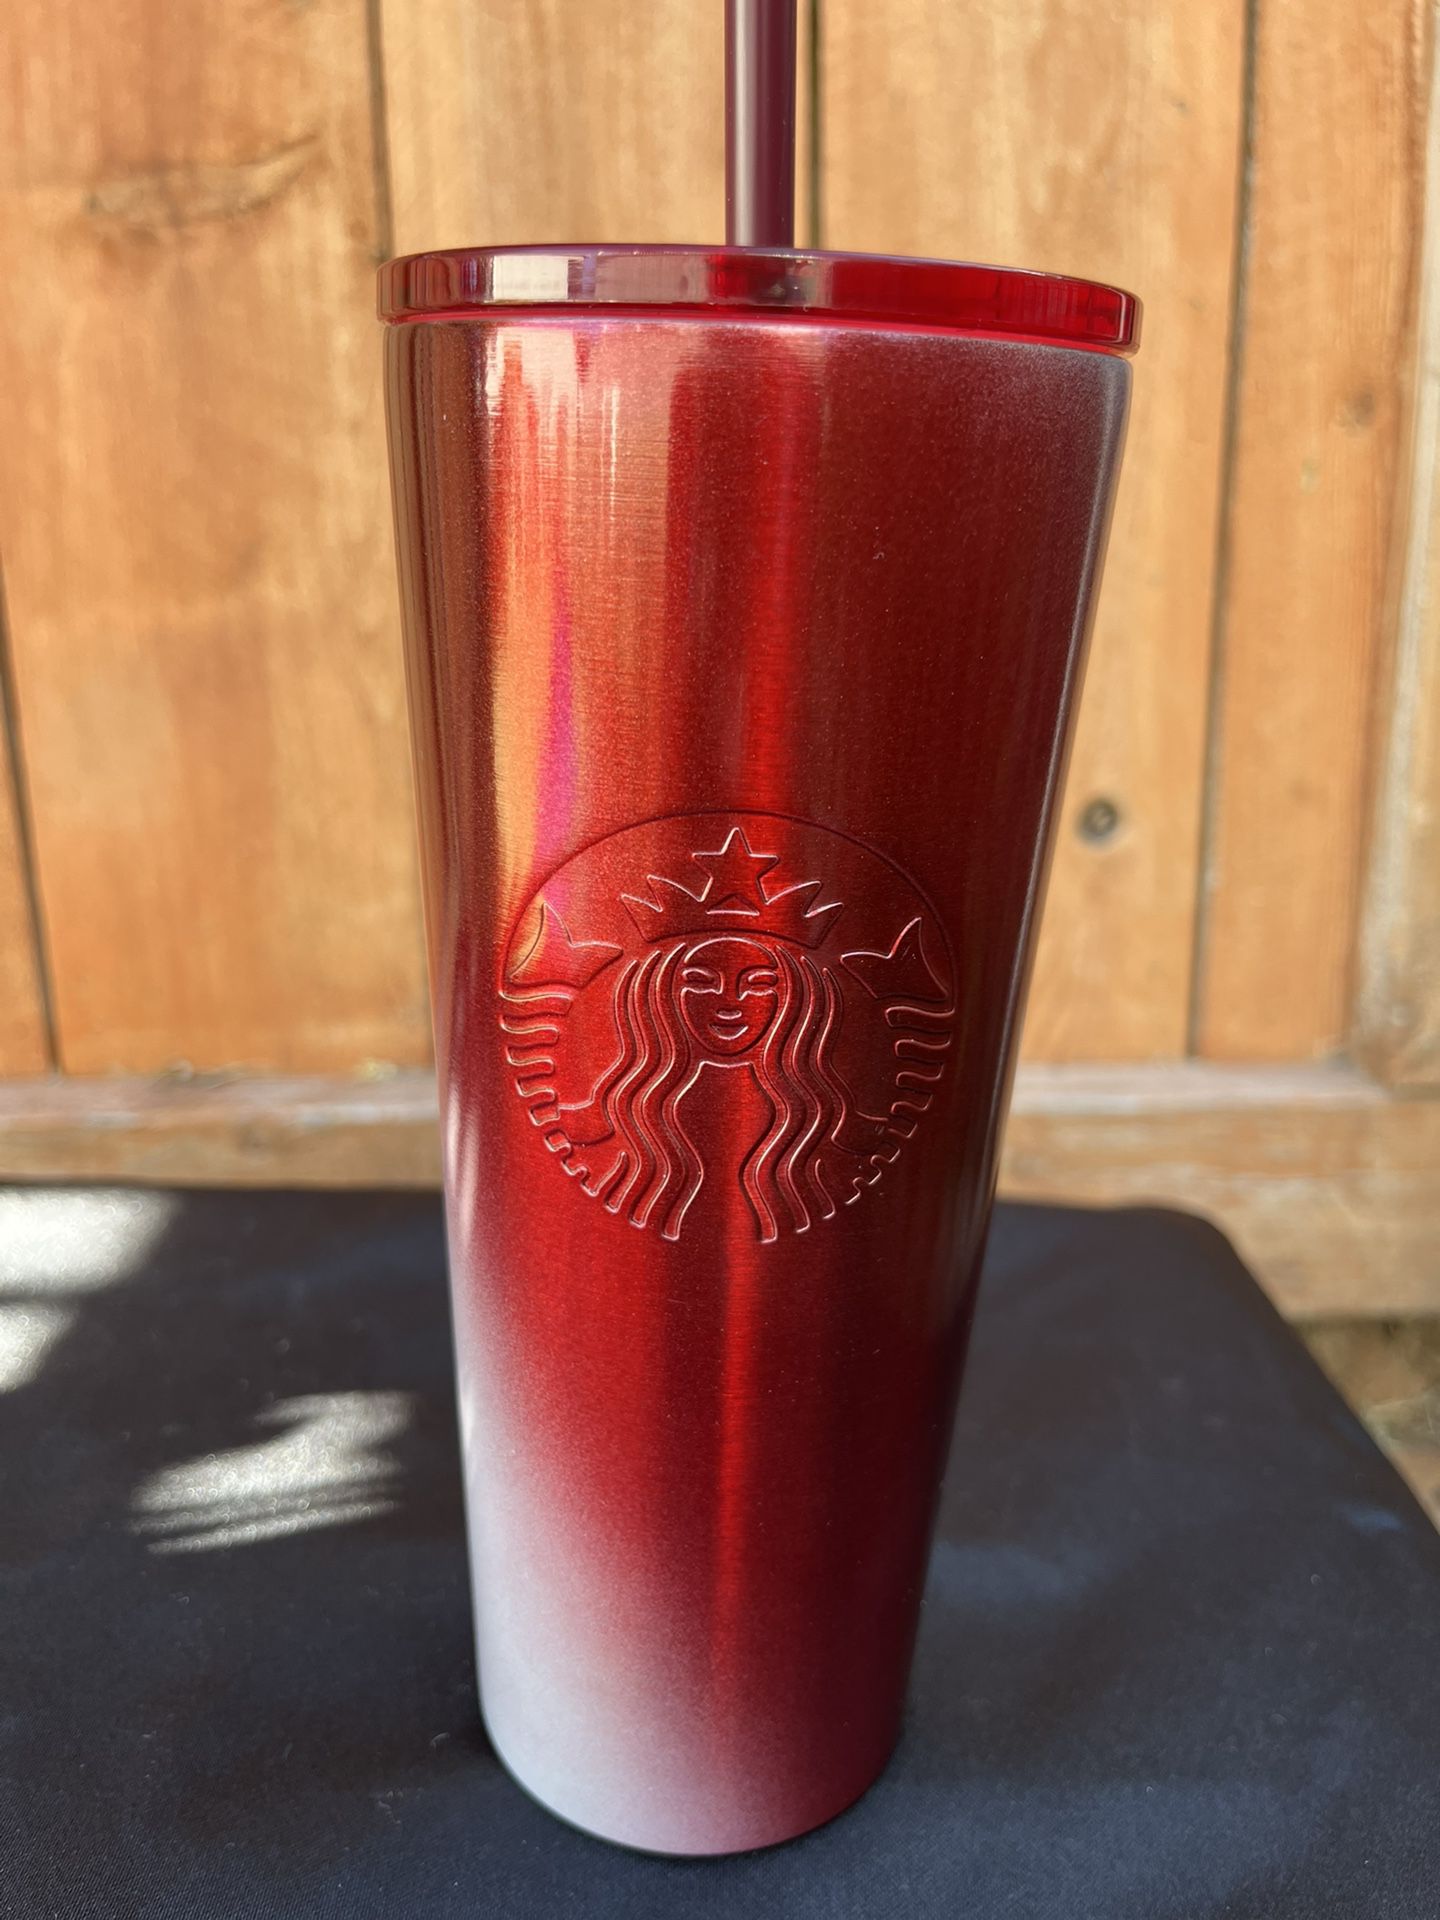 Snowboy (Red) Small World Tumbler 2015 Starbucks Coffee